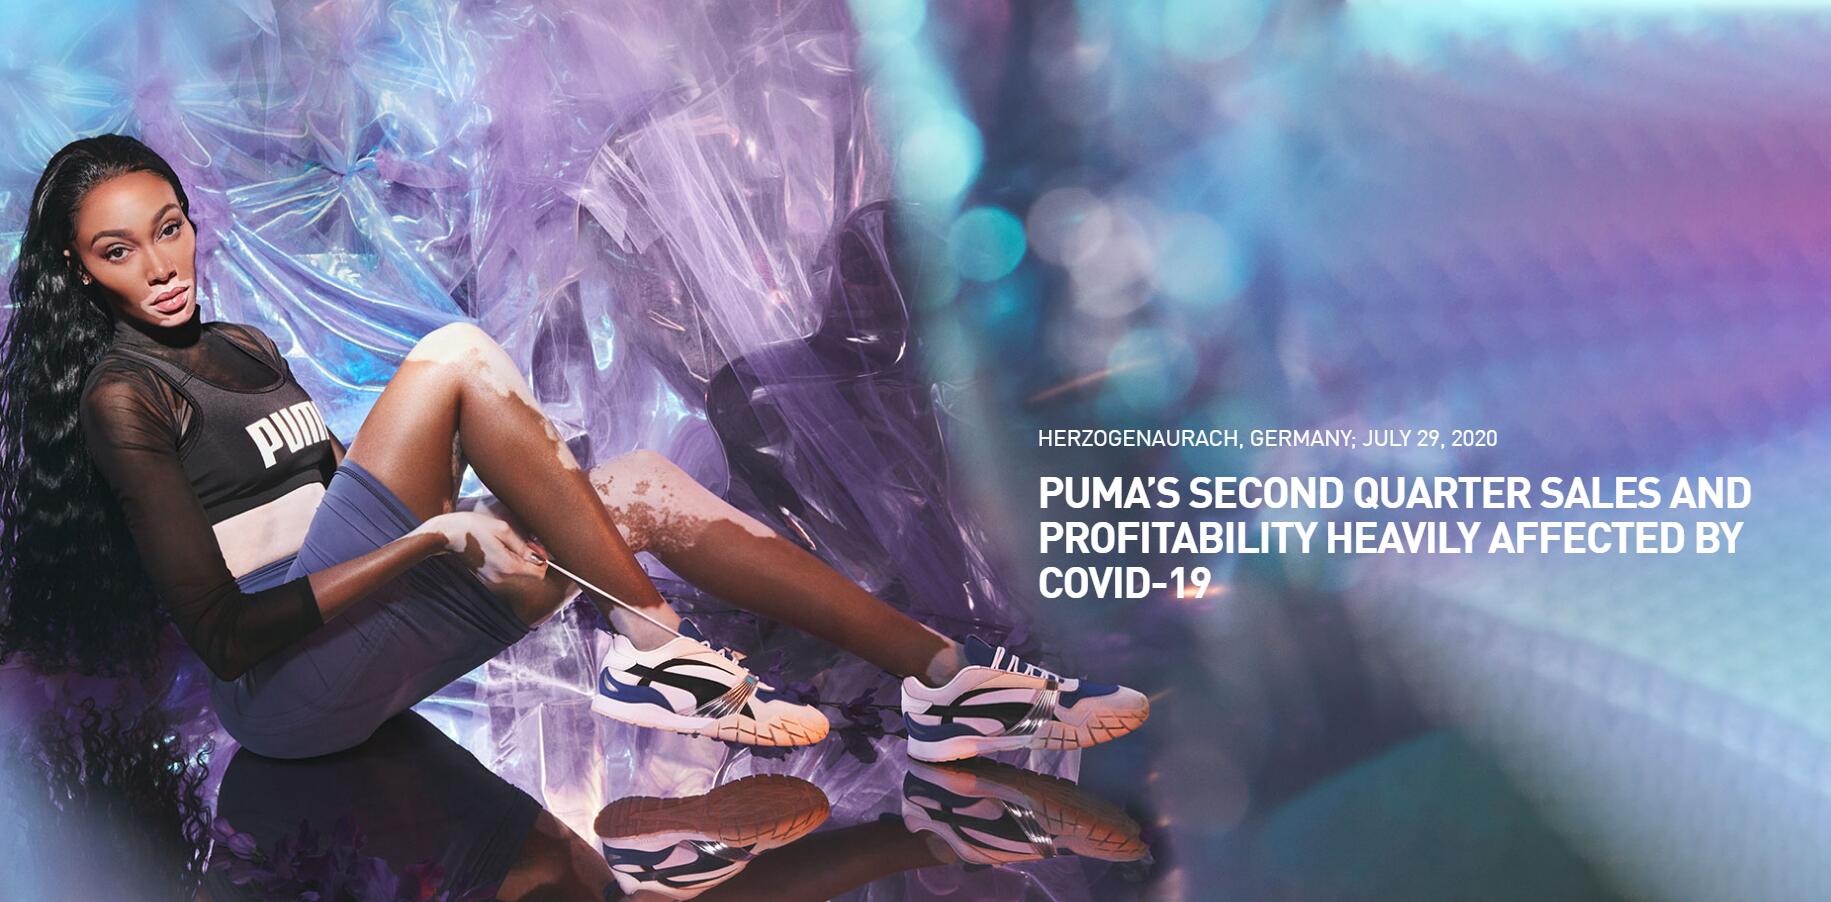 Puma 经历“最艰难的一个季度”，但大中华区销售逆势增长15.6%